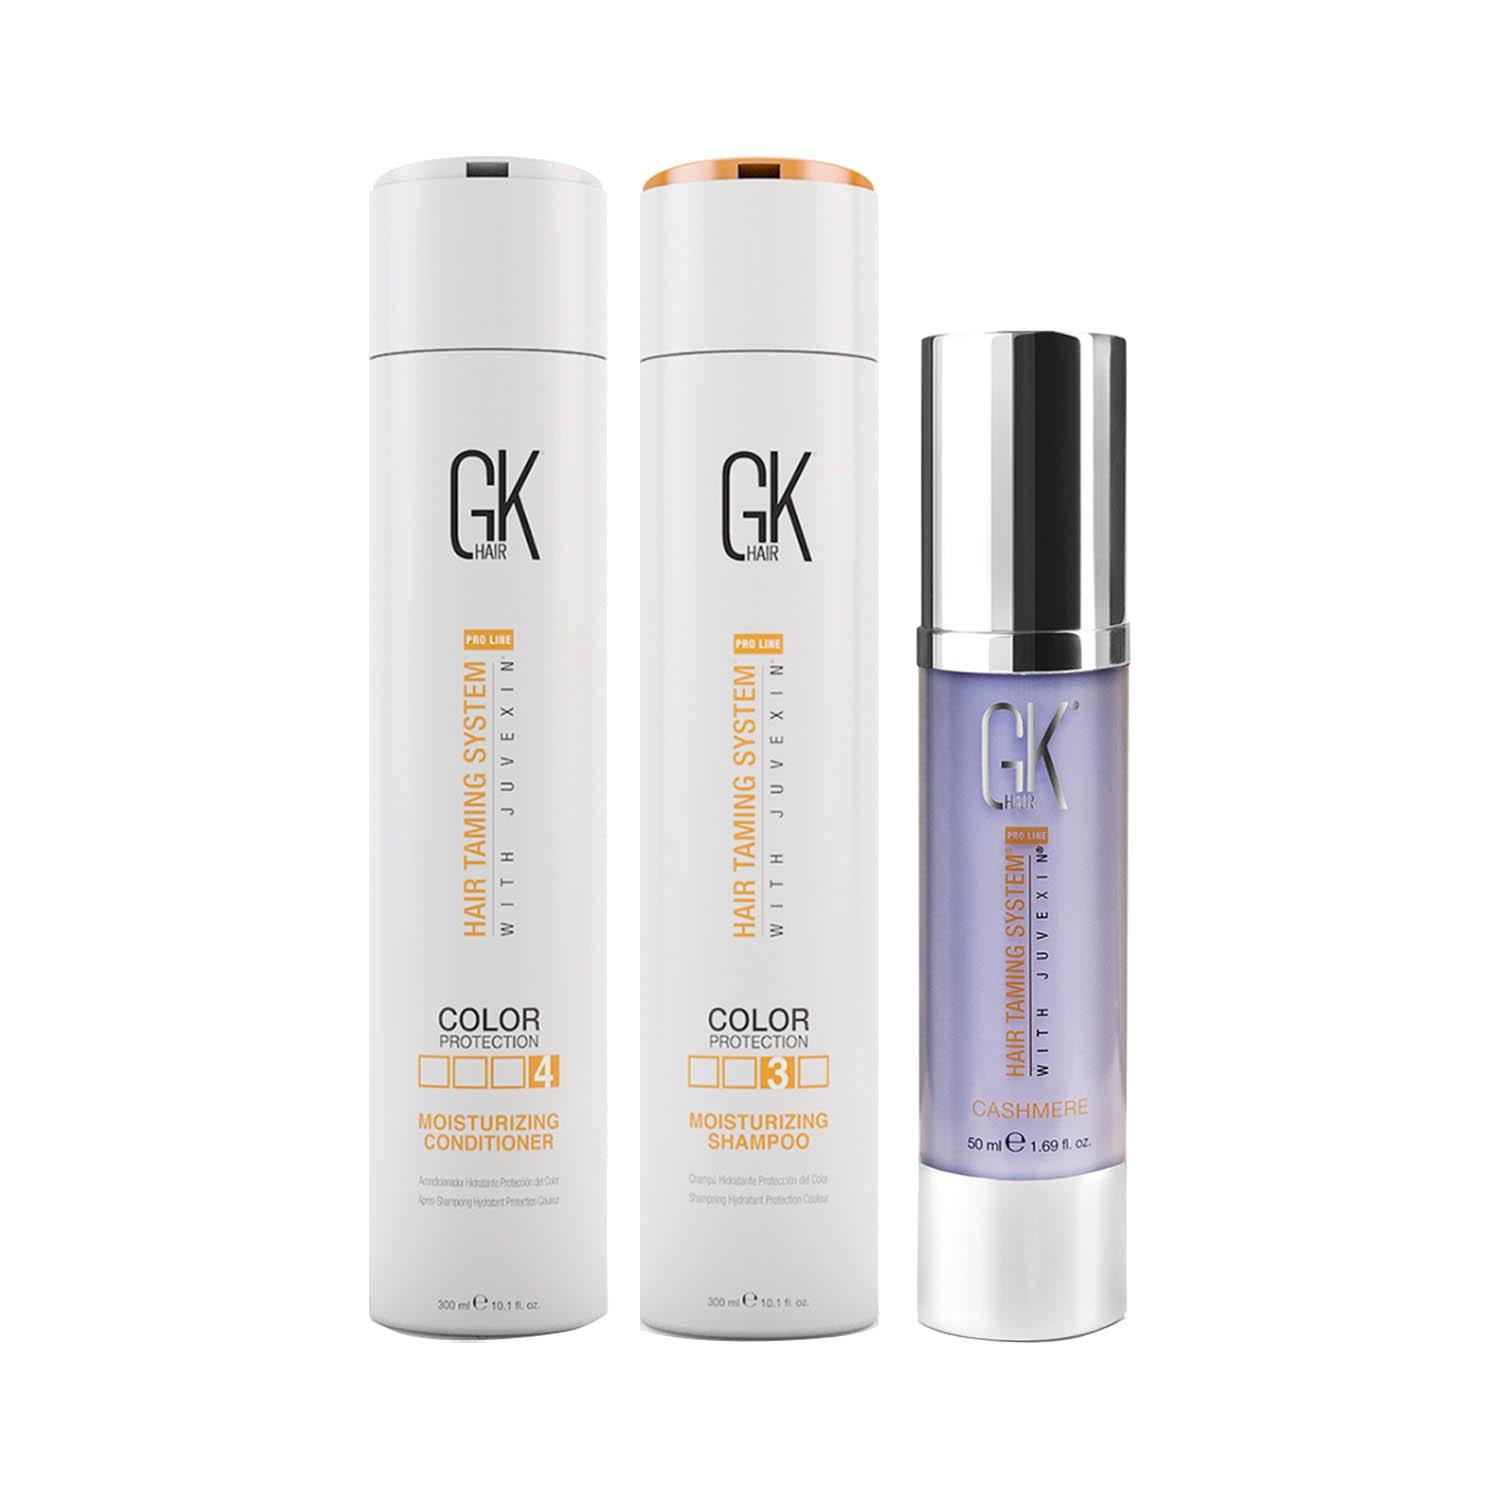 GK Hair | GK Hair Moisturizing Shampoo and Conditioner 300ml with Cashmere 50ml